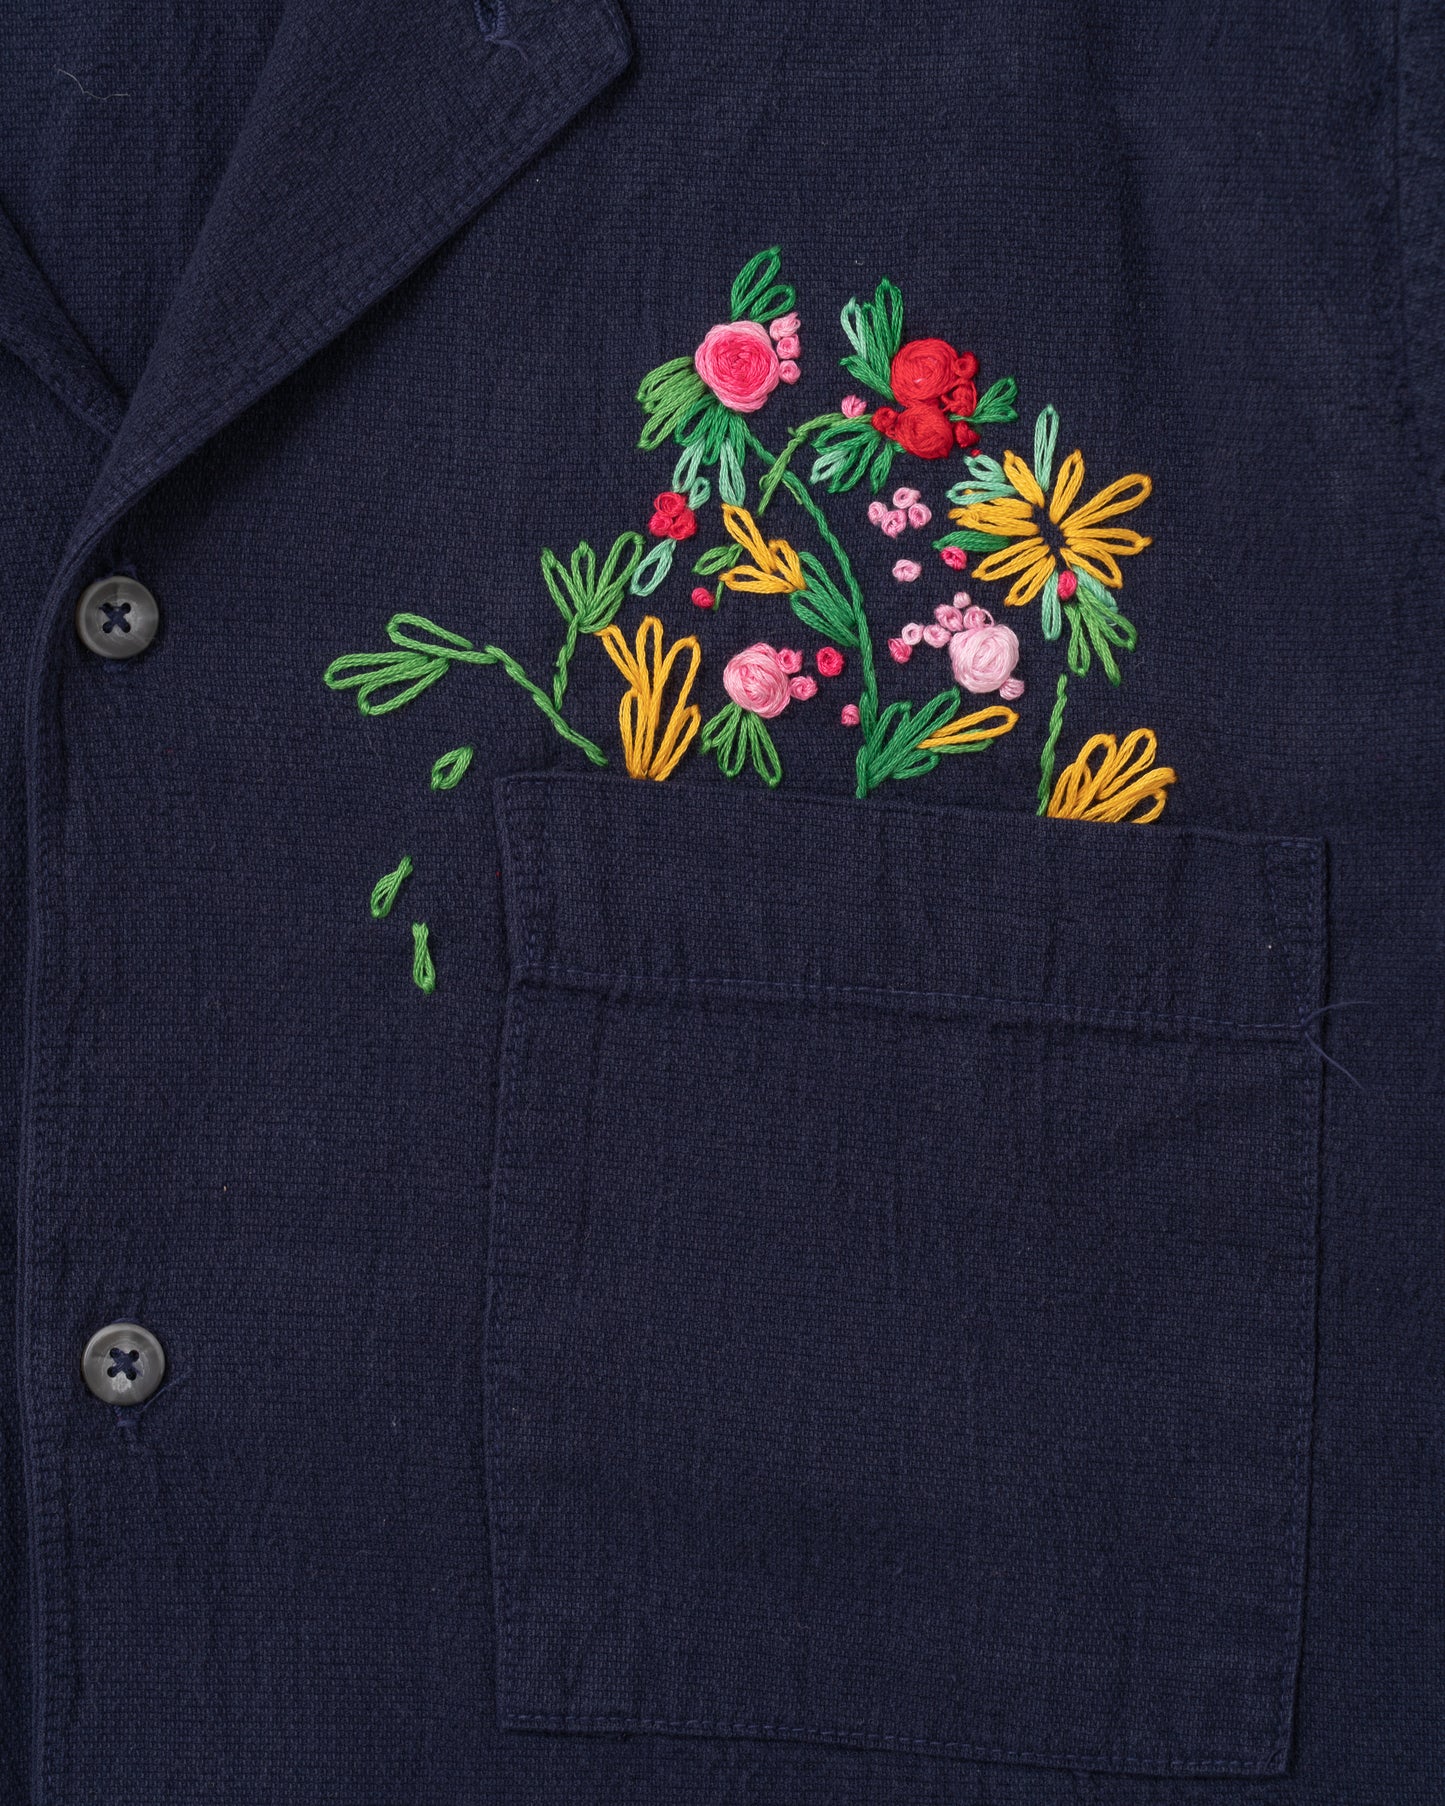 Crinkle S/S - Primary Floral Pocket